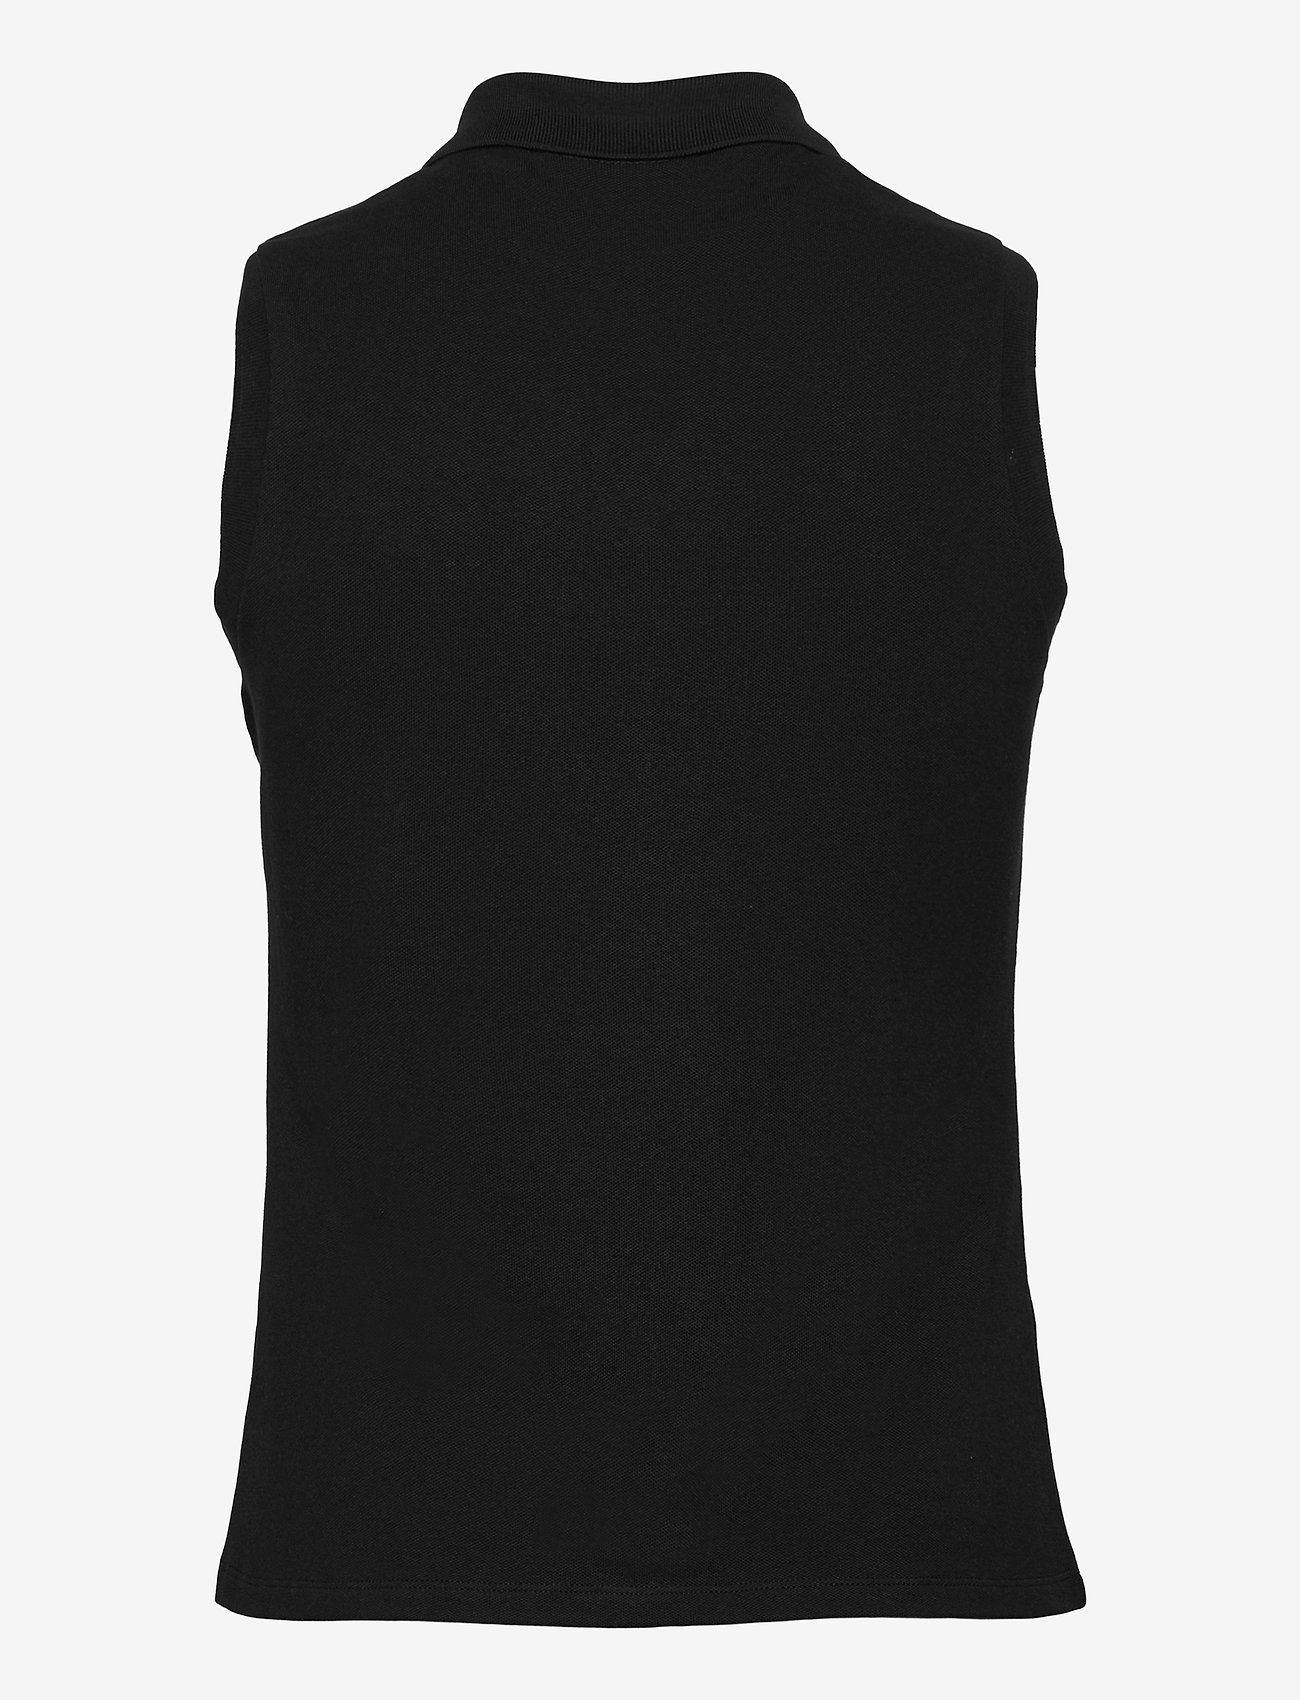 Lacoste - Women s S/S polo - sleeveless tops - black - 1